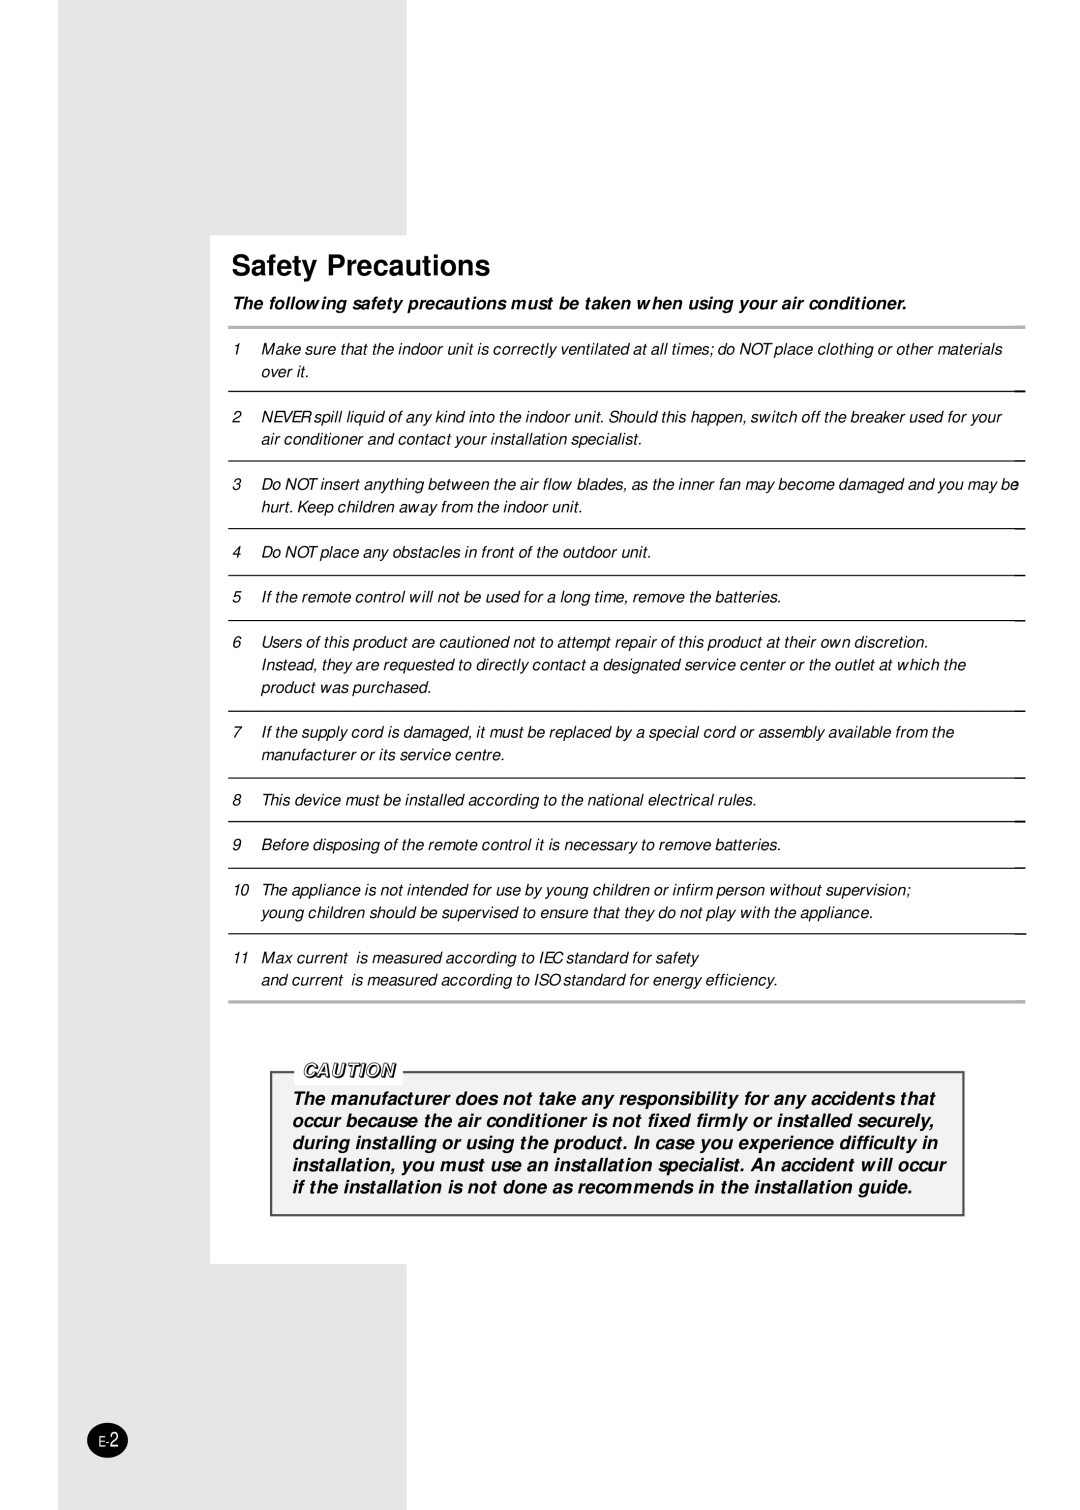 Samsung AQ12A2MD, UQ12A2MD, UQ09A2MD, AQ09A2MD manual Safety Precautions 